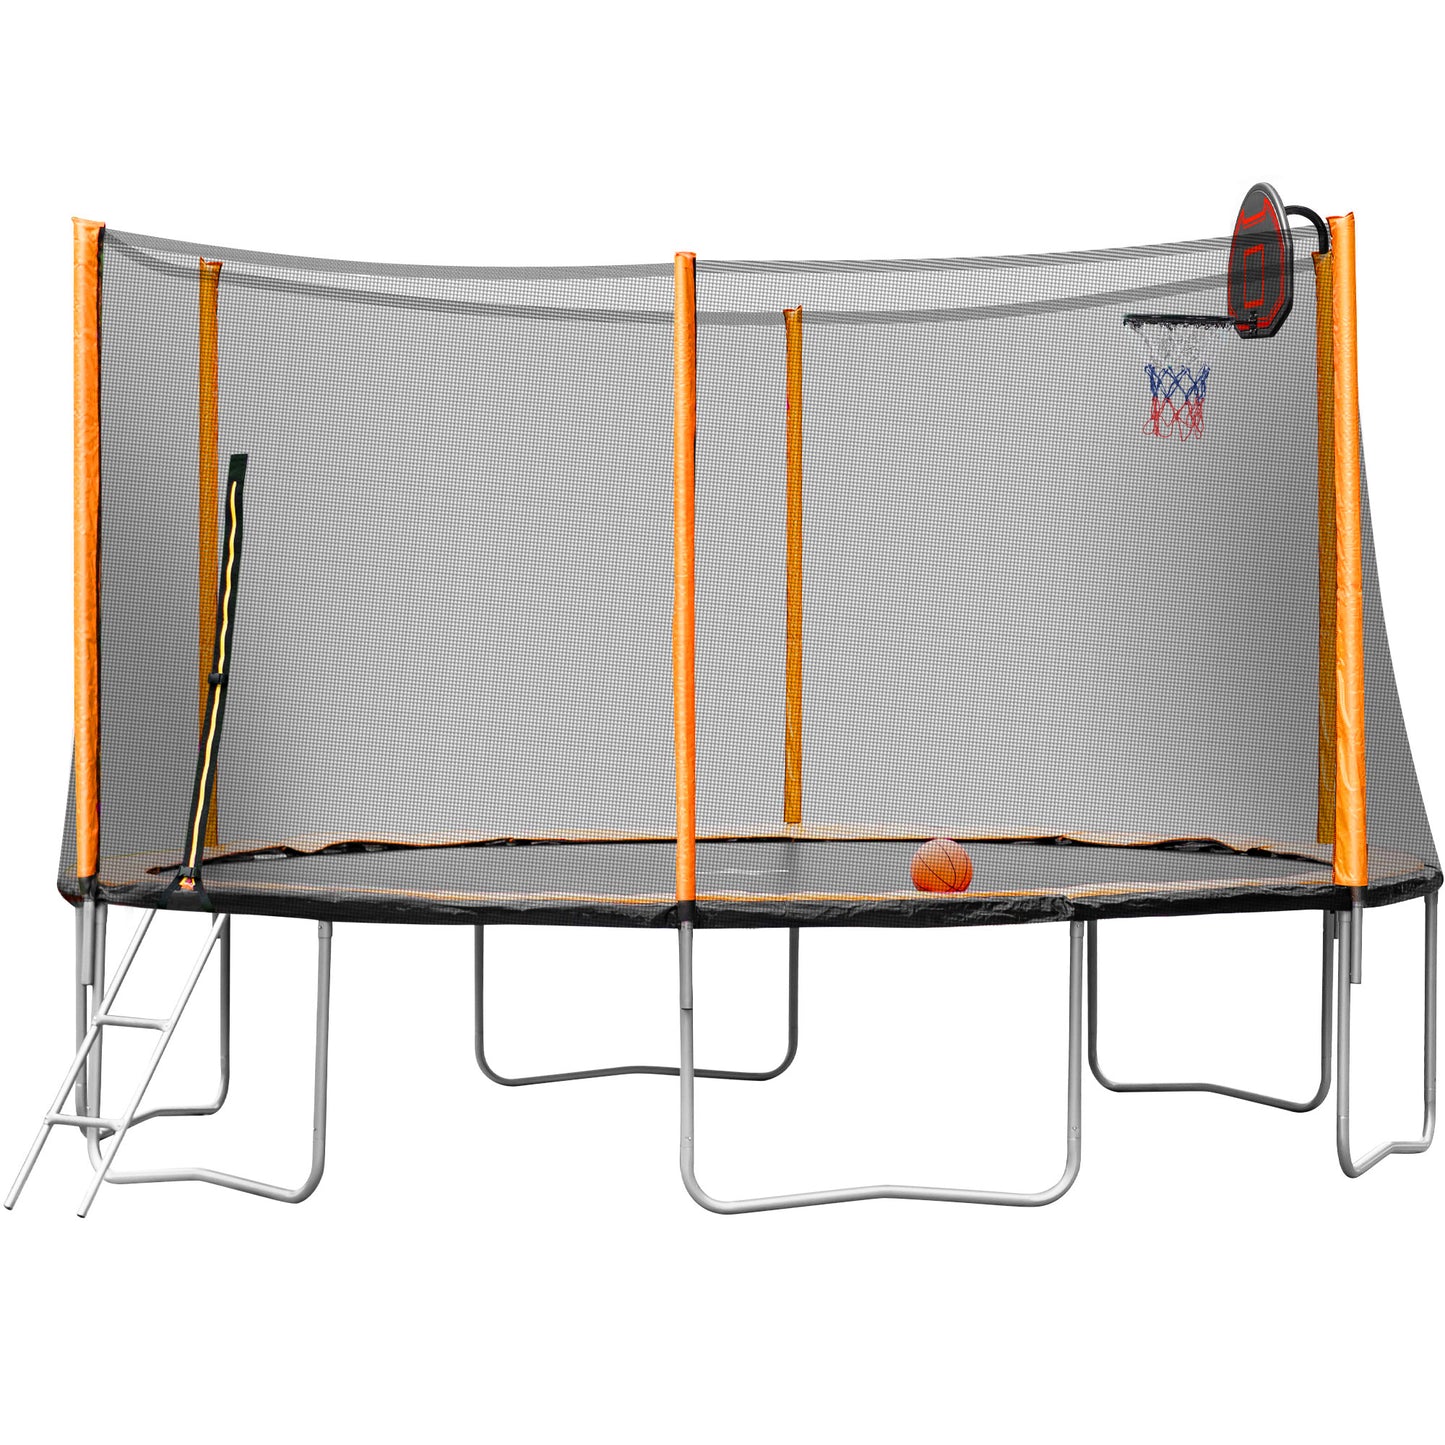 14FT outer safety net trampoline orange A